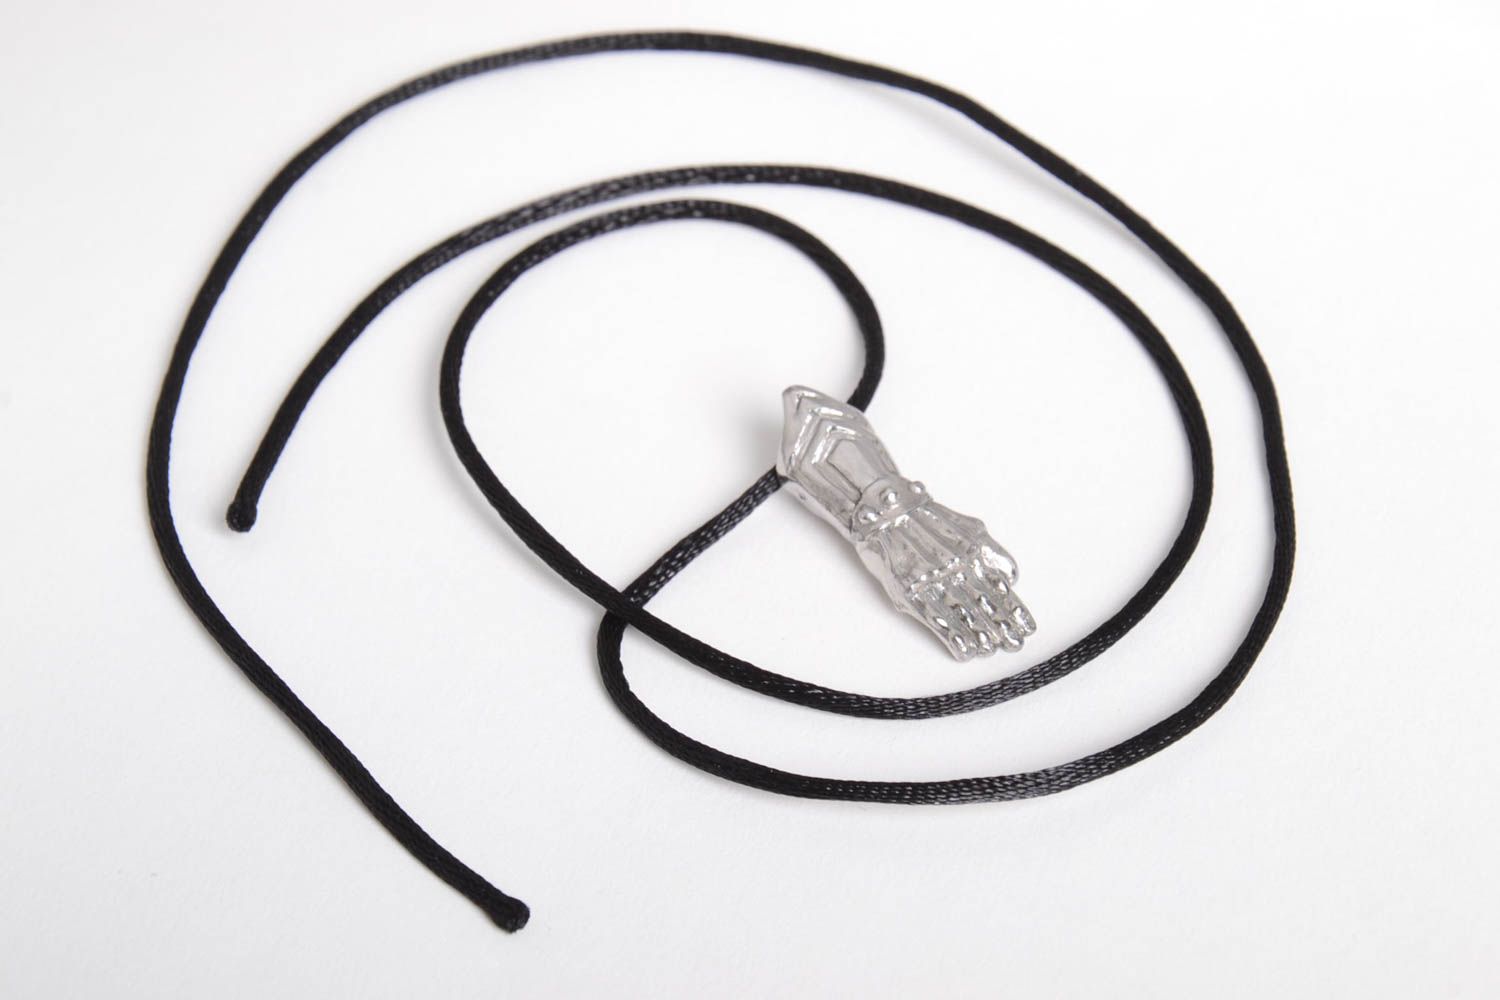 Unusual handmade metal pendant cool unisex jewelry designs gift ideas photo 5